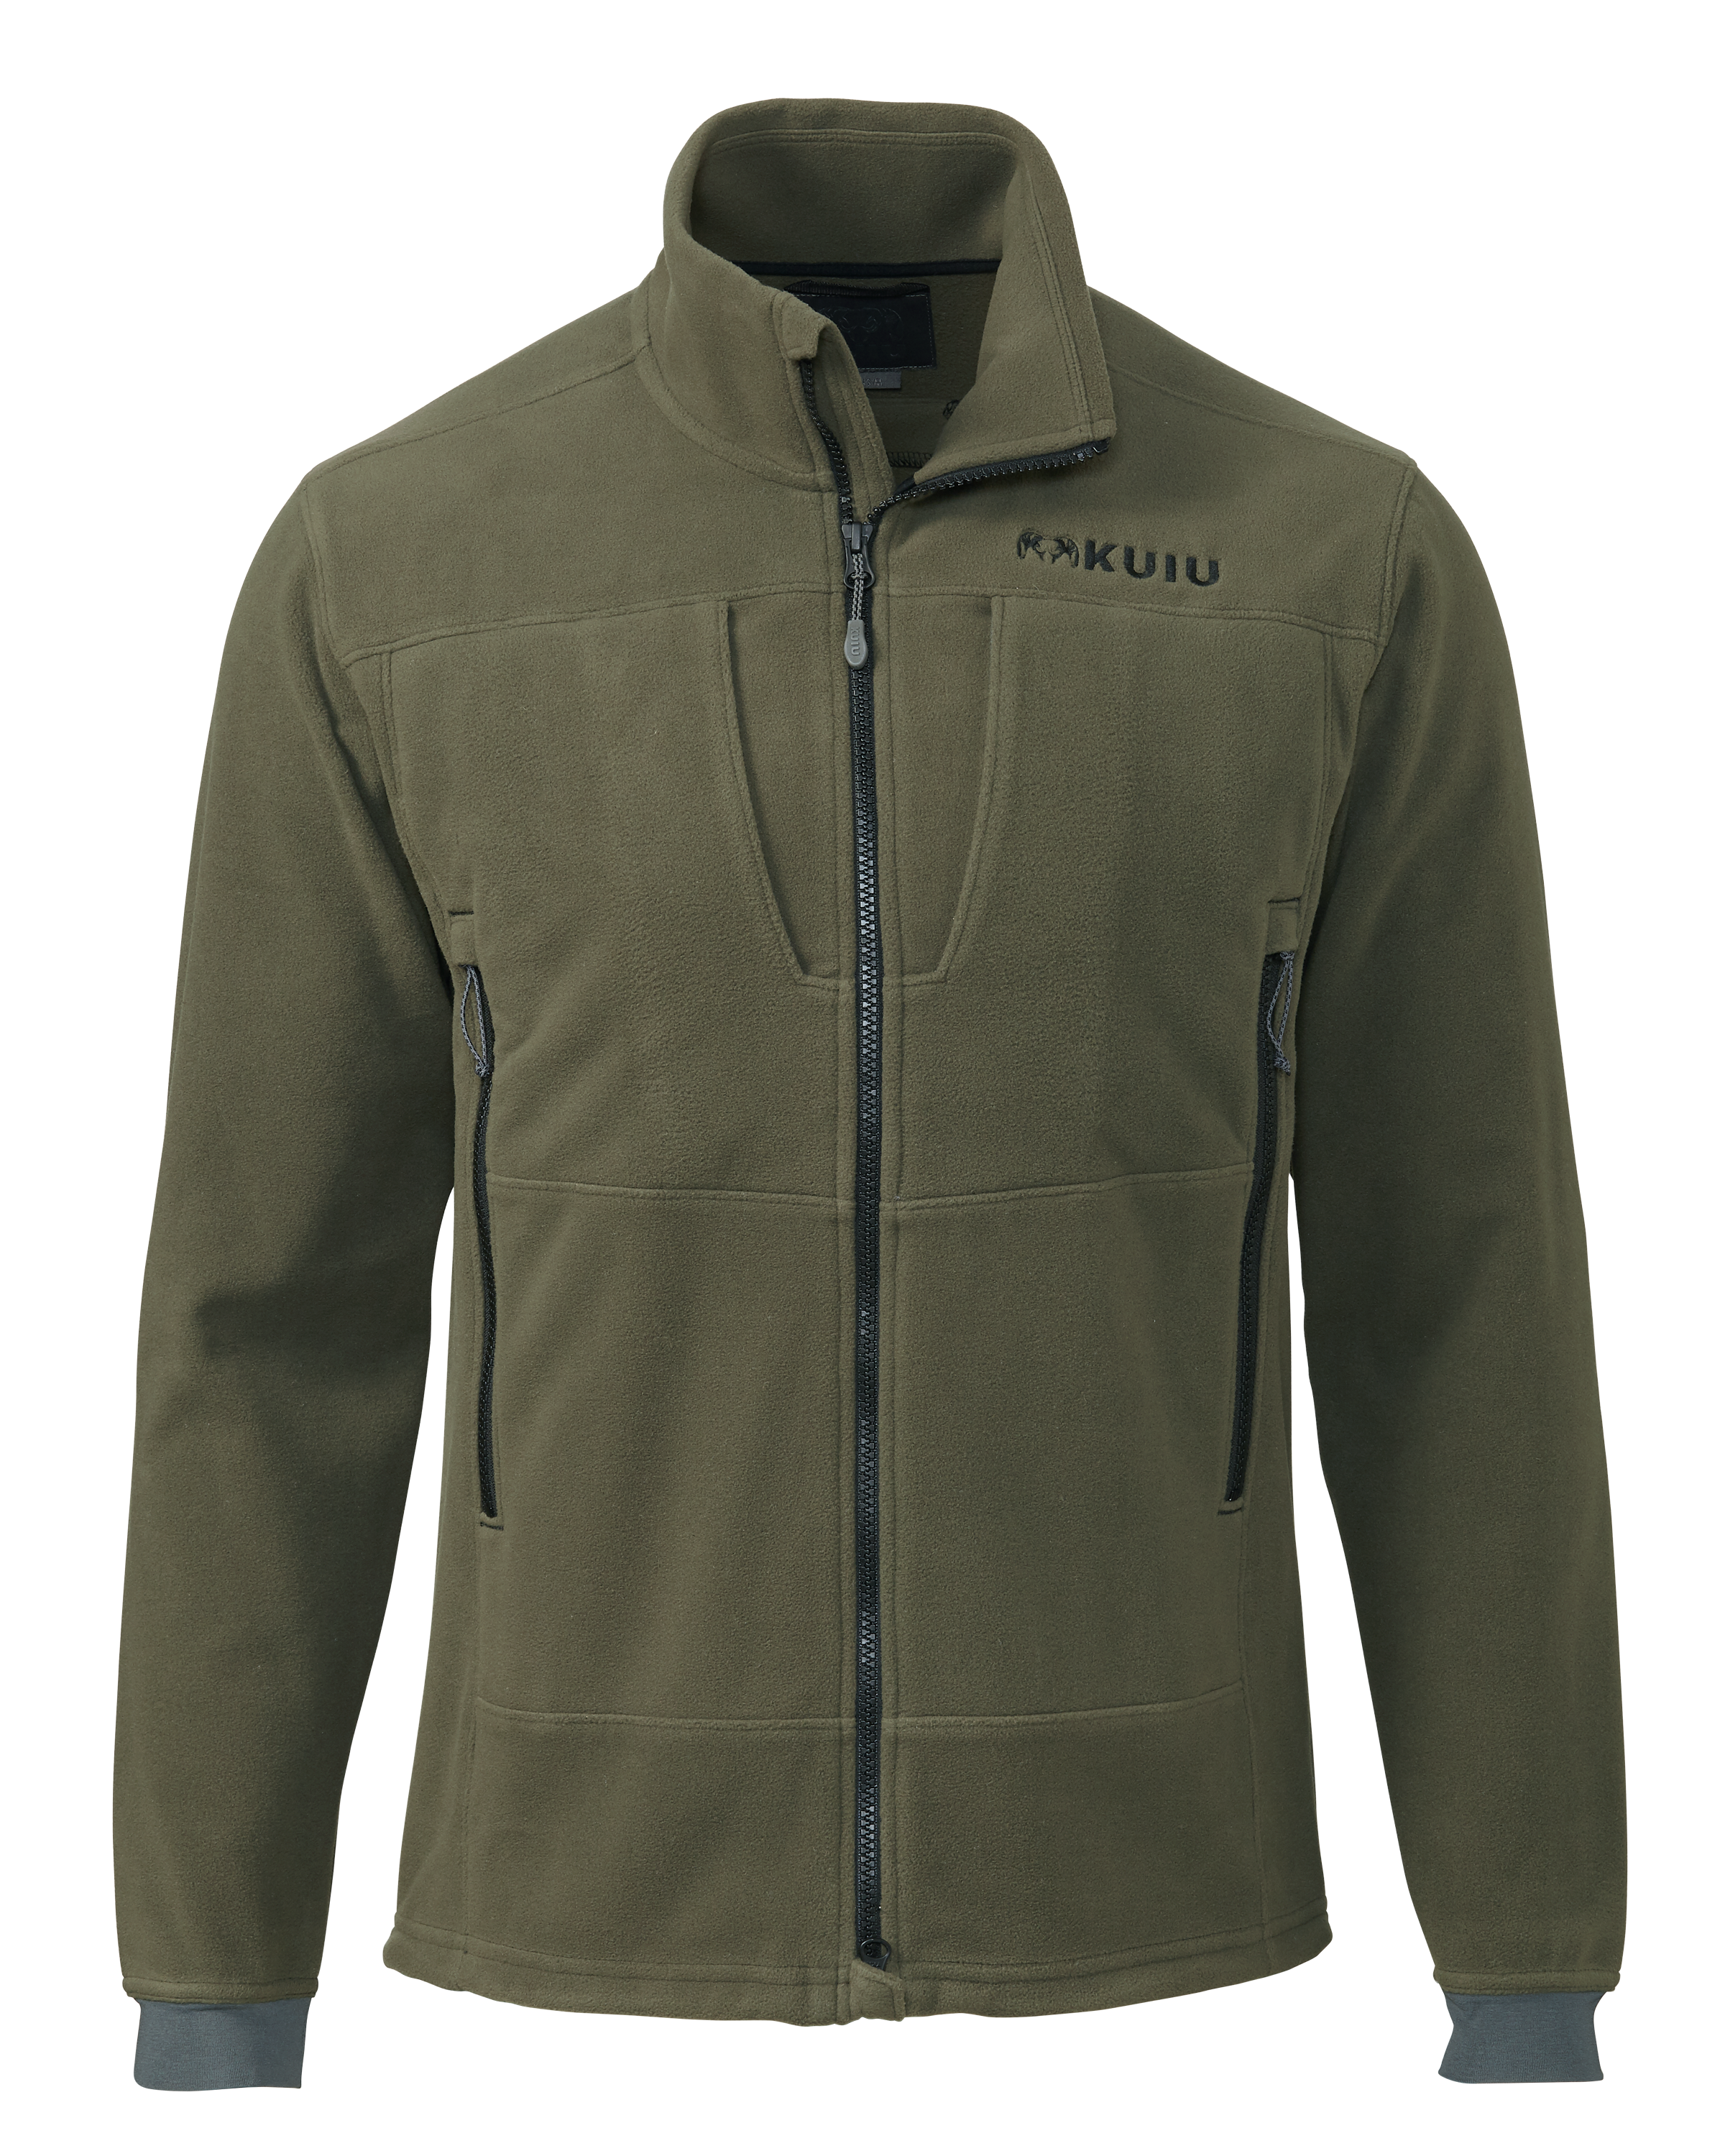 KUIU Wind Pro Fleece Full Zip Hunting Jacket in Olive | Size Medium